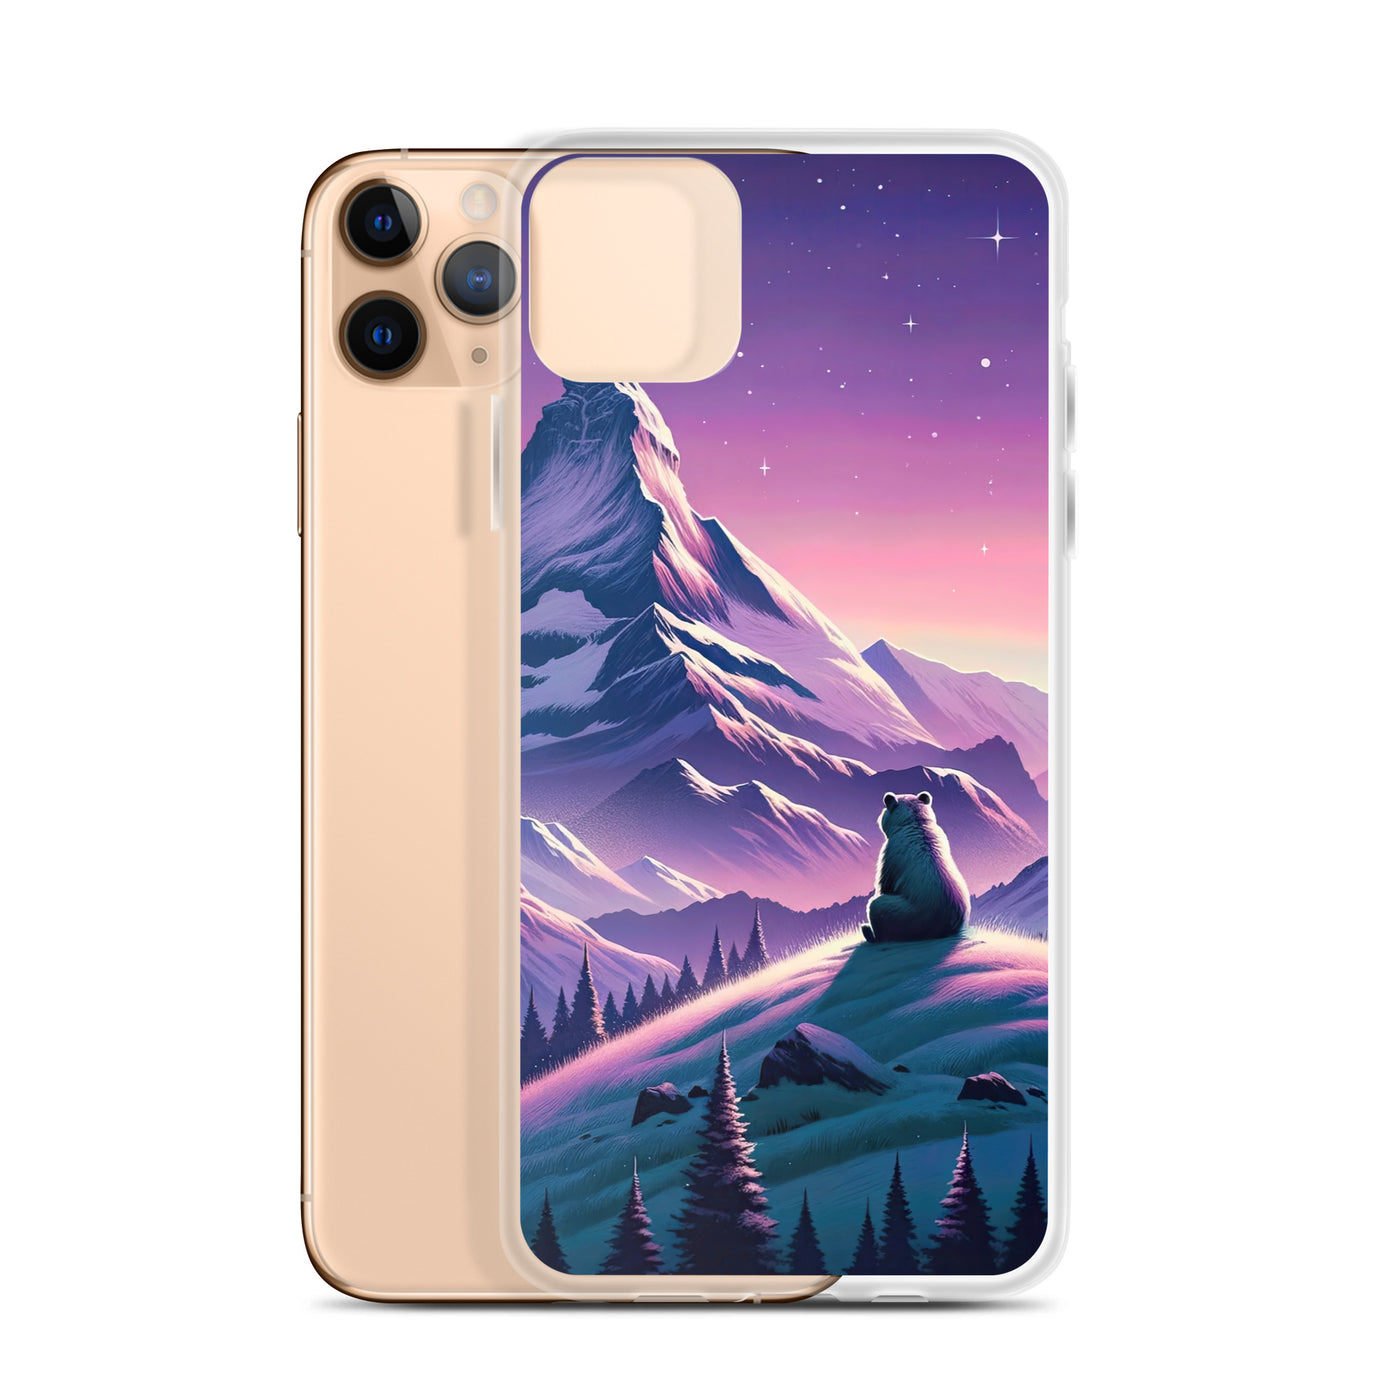 Bezaubernder Alpenabend mit Bär, lavendel-rosafarbener Himmel (AN) - iPhone Schutzhülle (durchsichtig) xxx yyy zzz